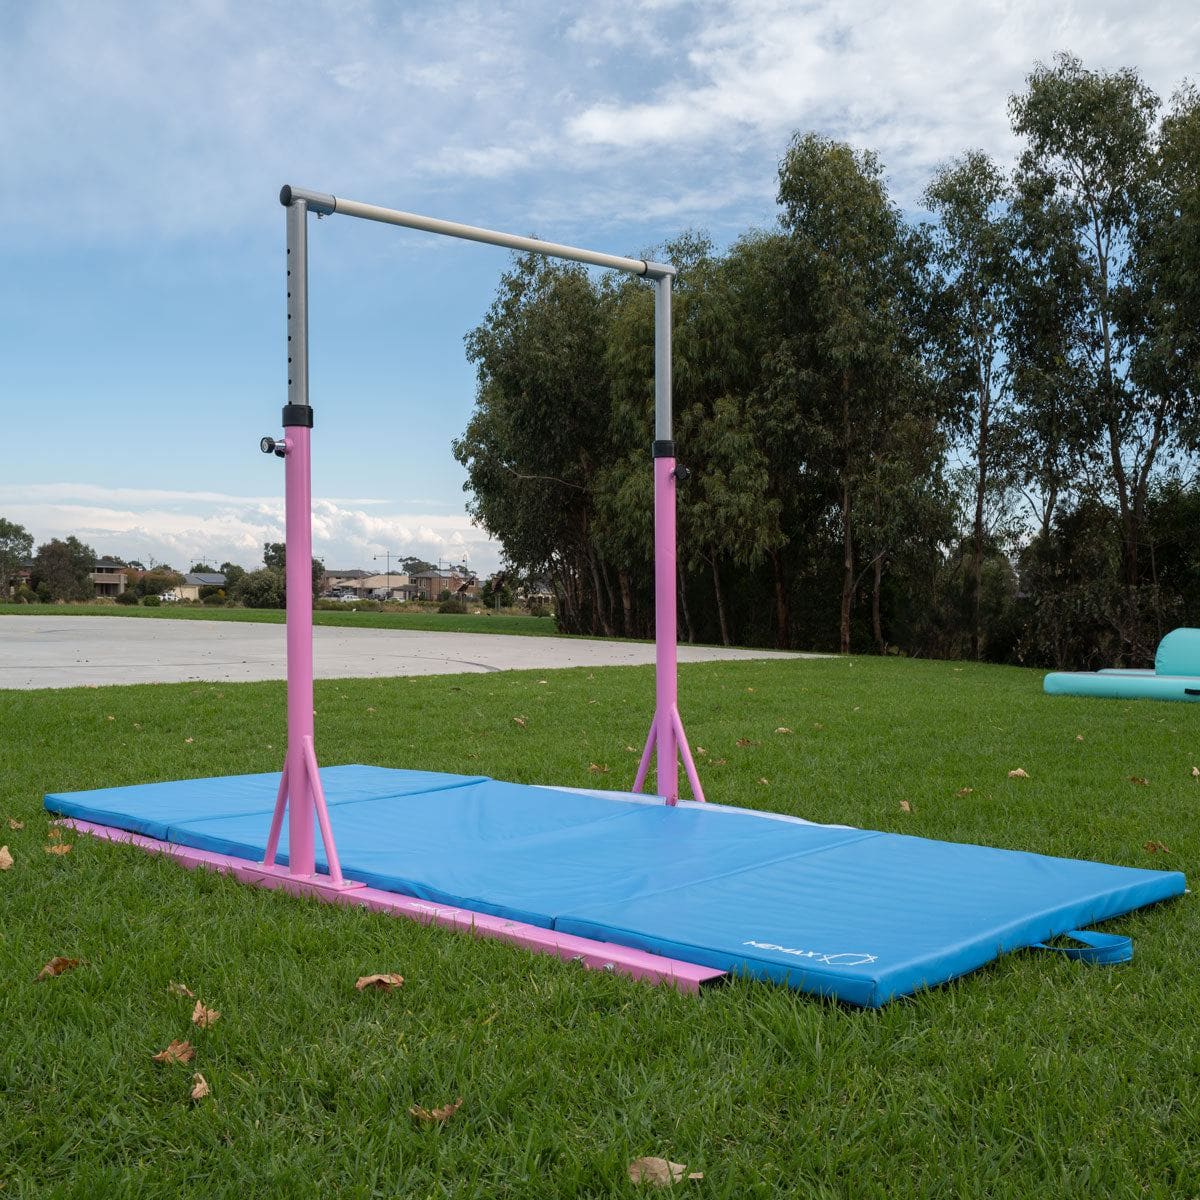 Value Combo Advanced Gymnastic Horizontal Bar Long Base Training Bar + Gym Mat (Pink)